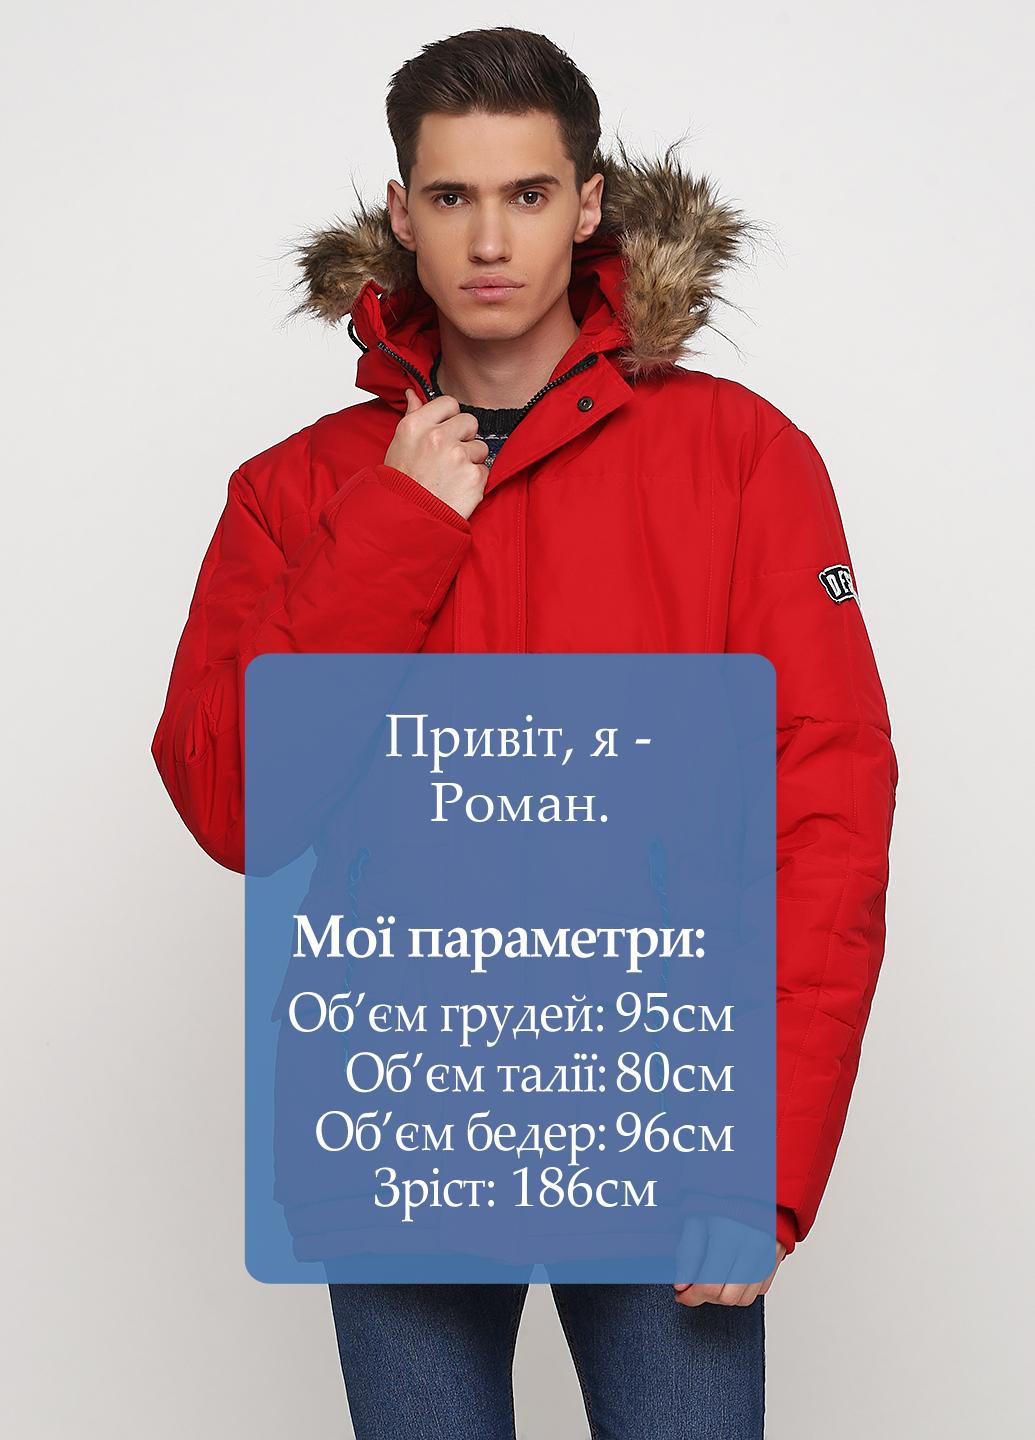 Червона зимня куртка Desigual